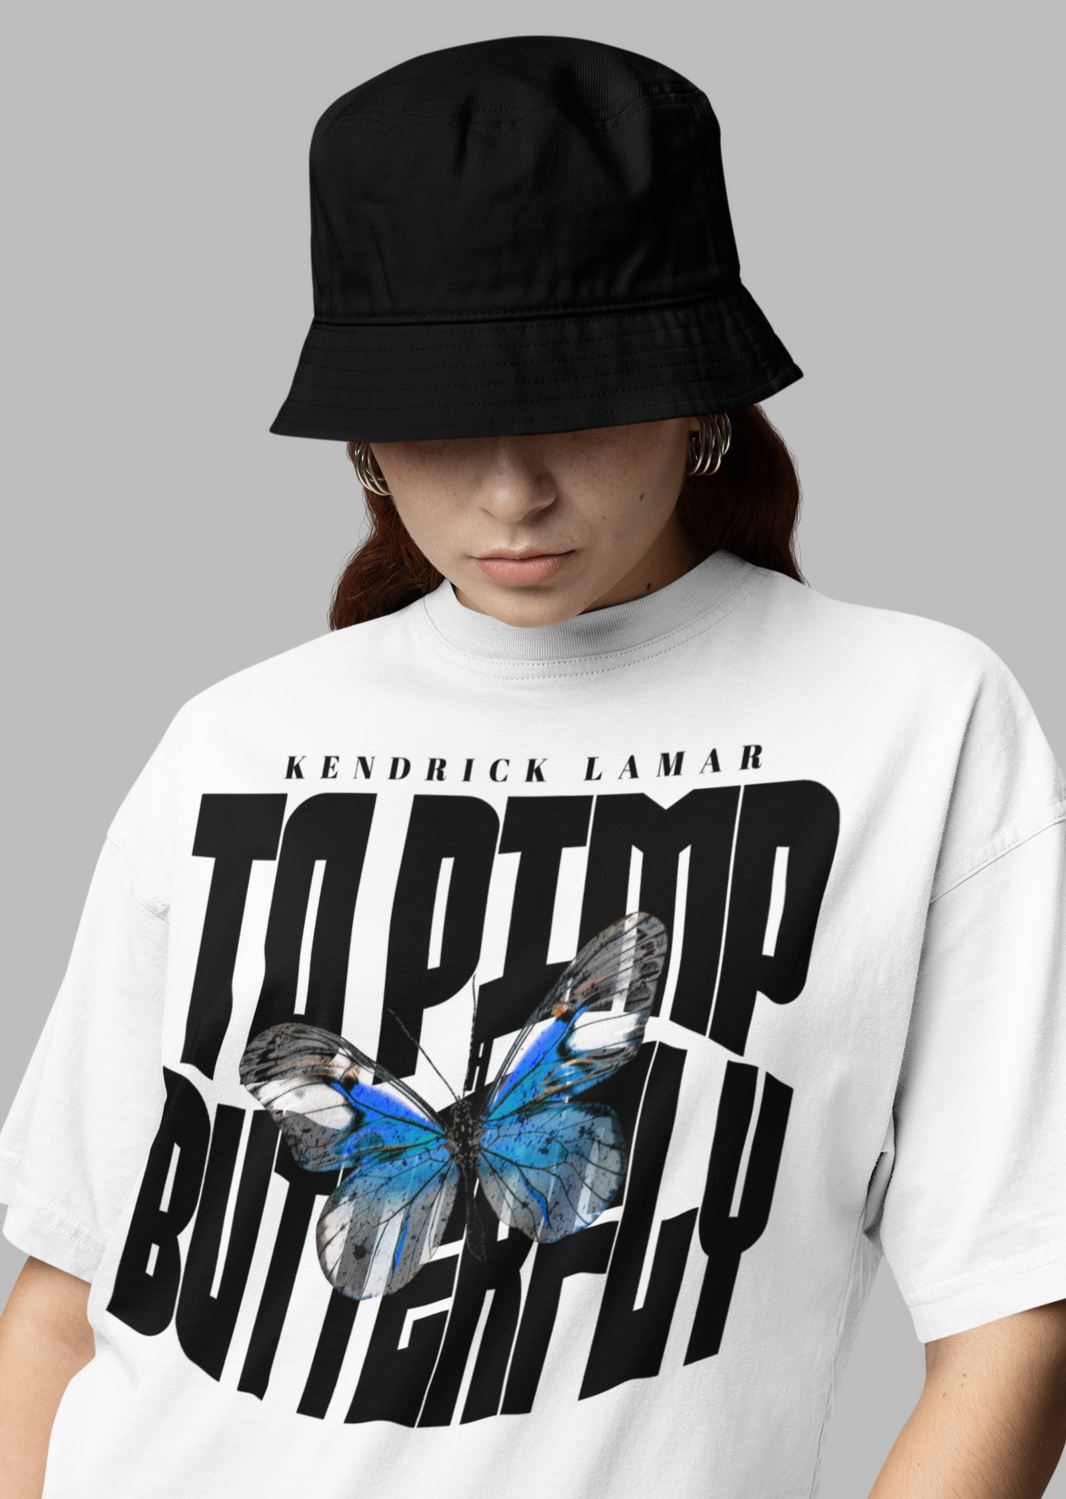 Kendrick Lamar To Pimp a Butterfly T-shirt